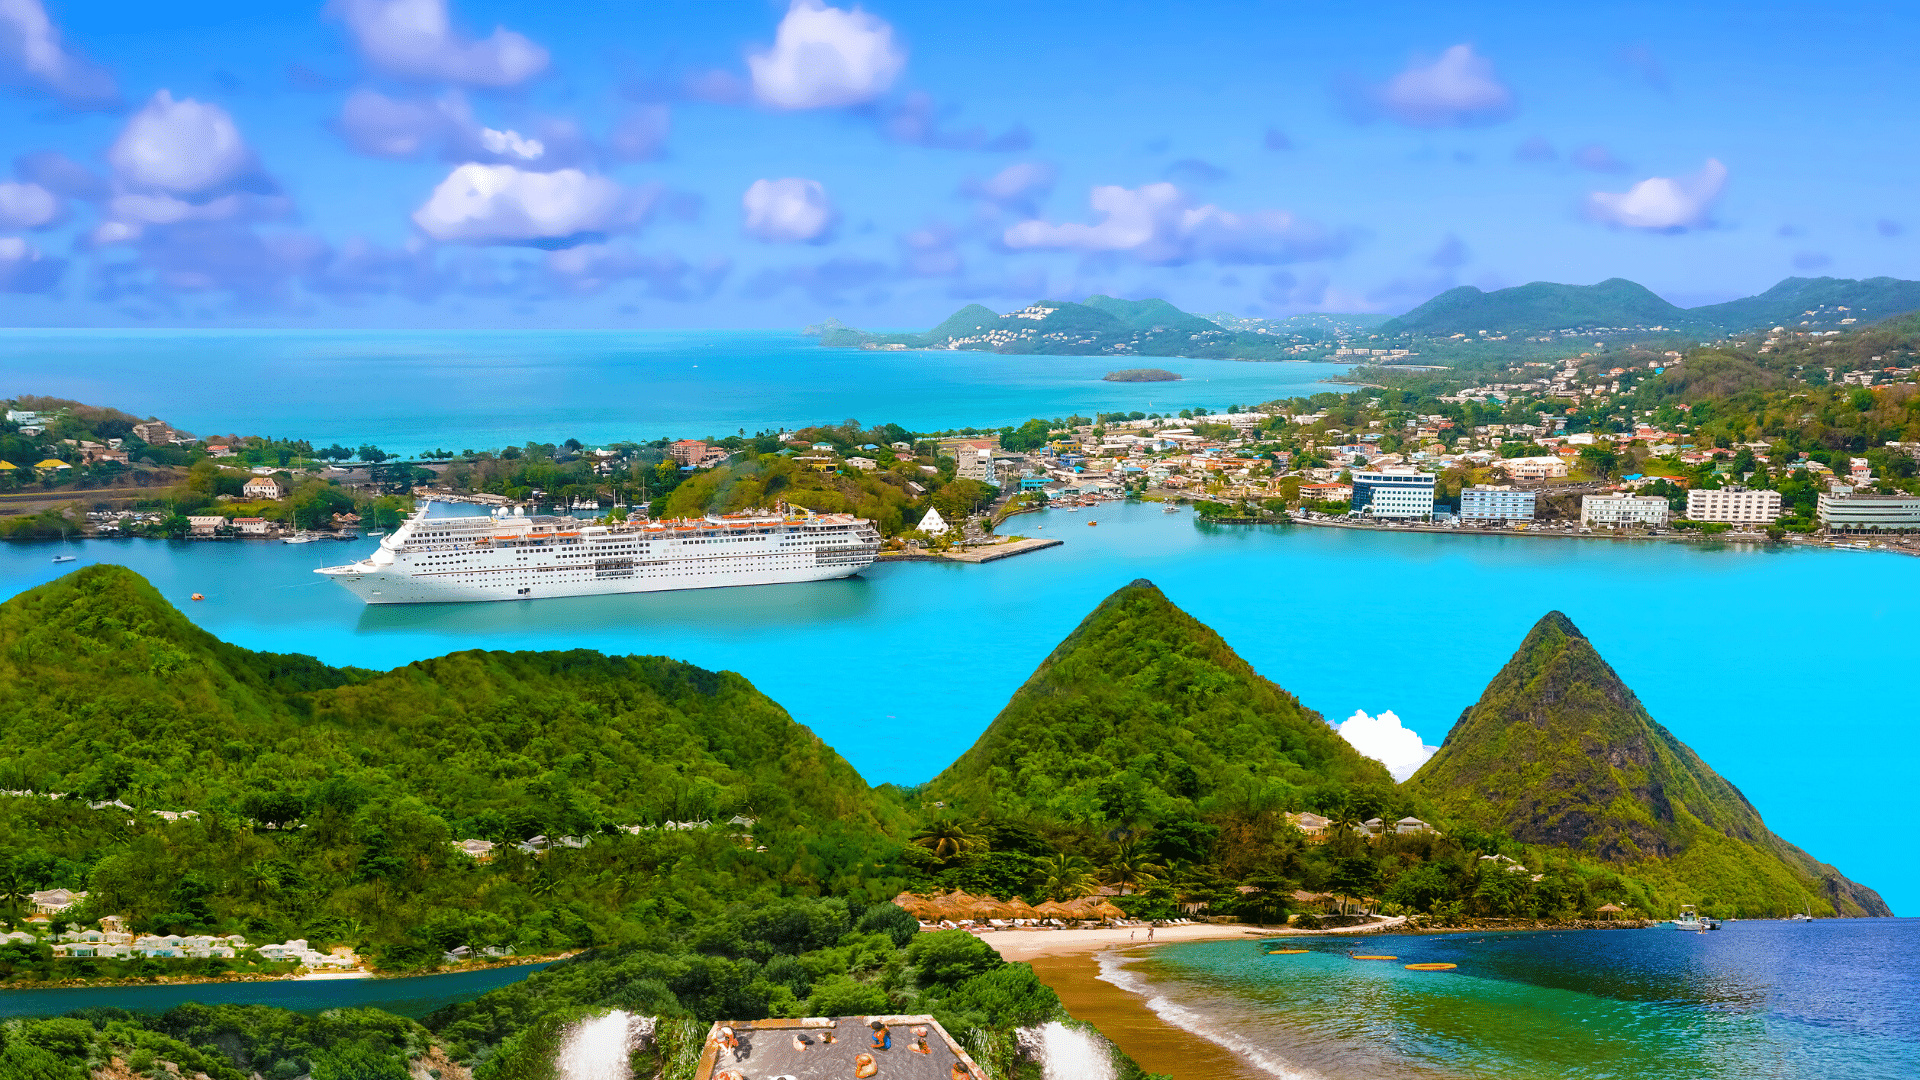 Castries, Saint Lucia travels, Luxury hotels selection, 1920x1080 Full HD Desktop